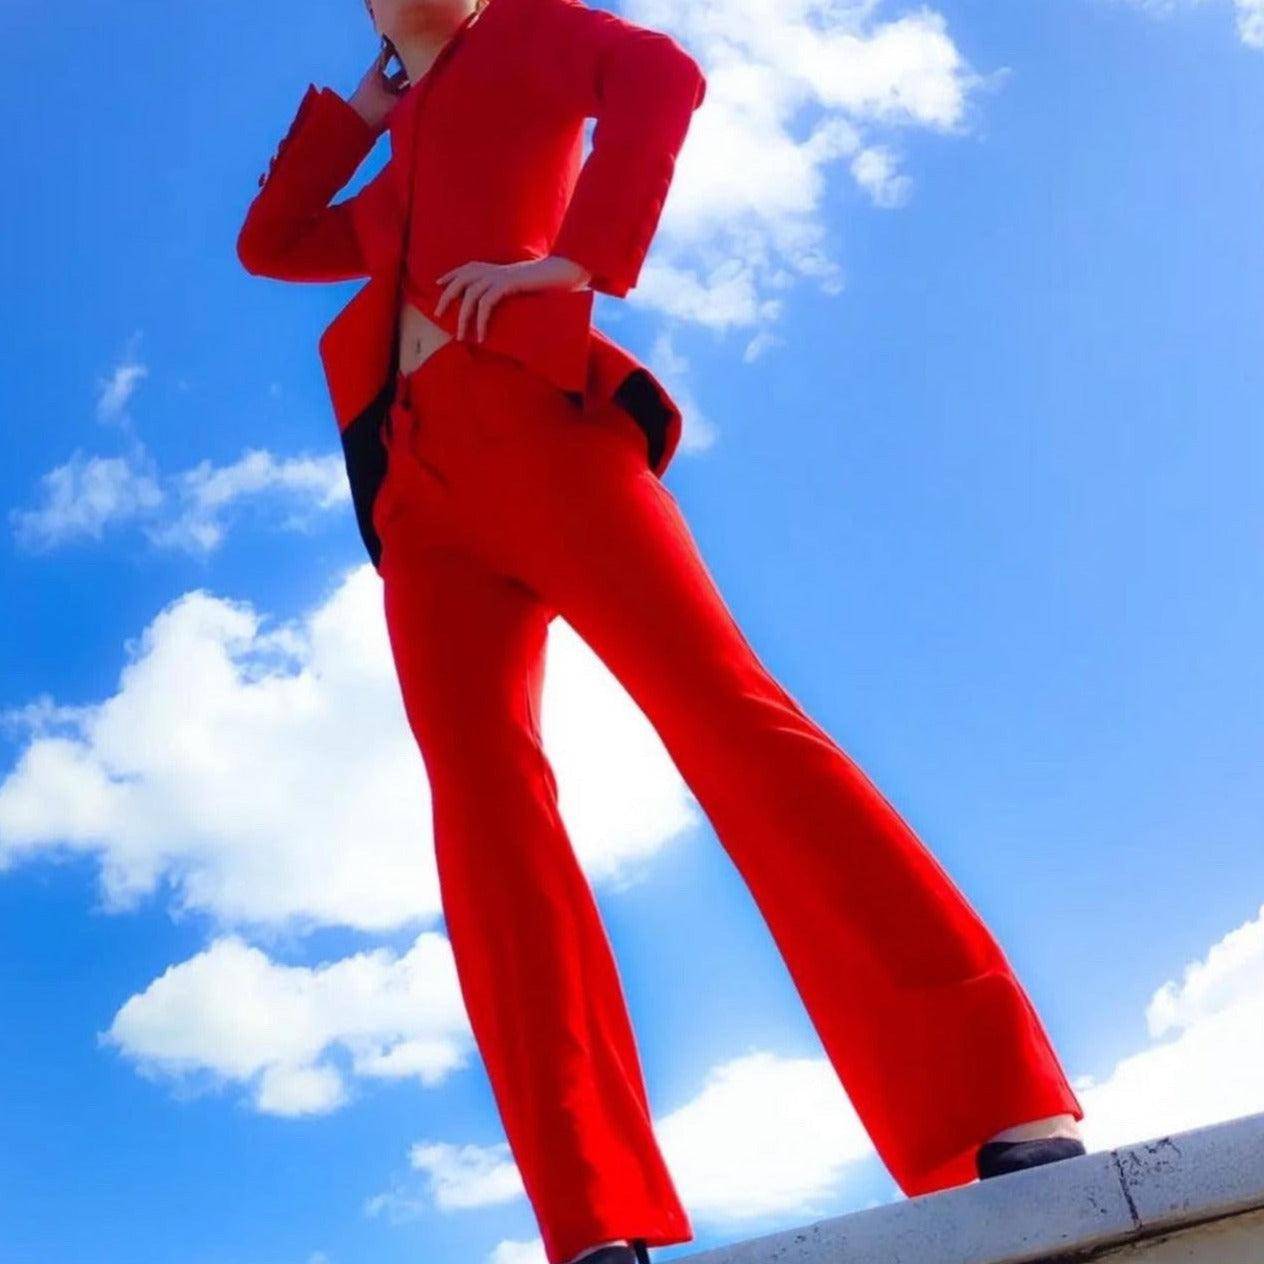 Klyda Solid Single Breasted Blazer & Flare Pants Set - Hot fashionista